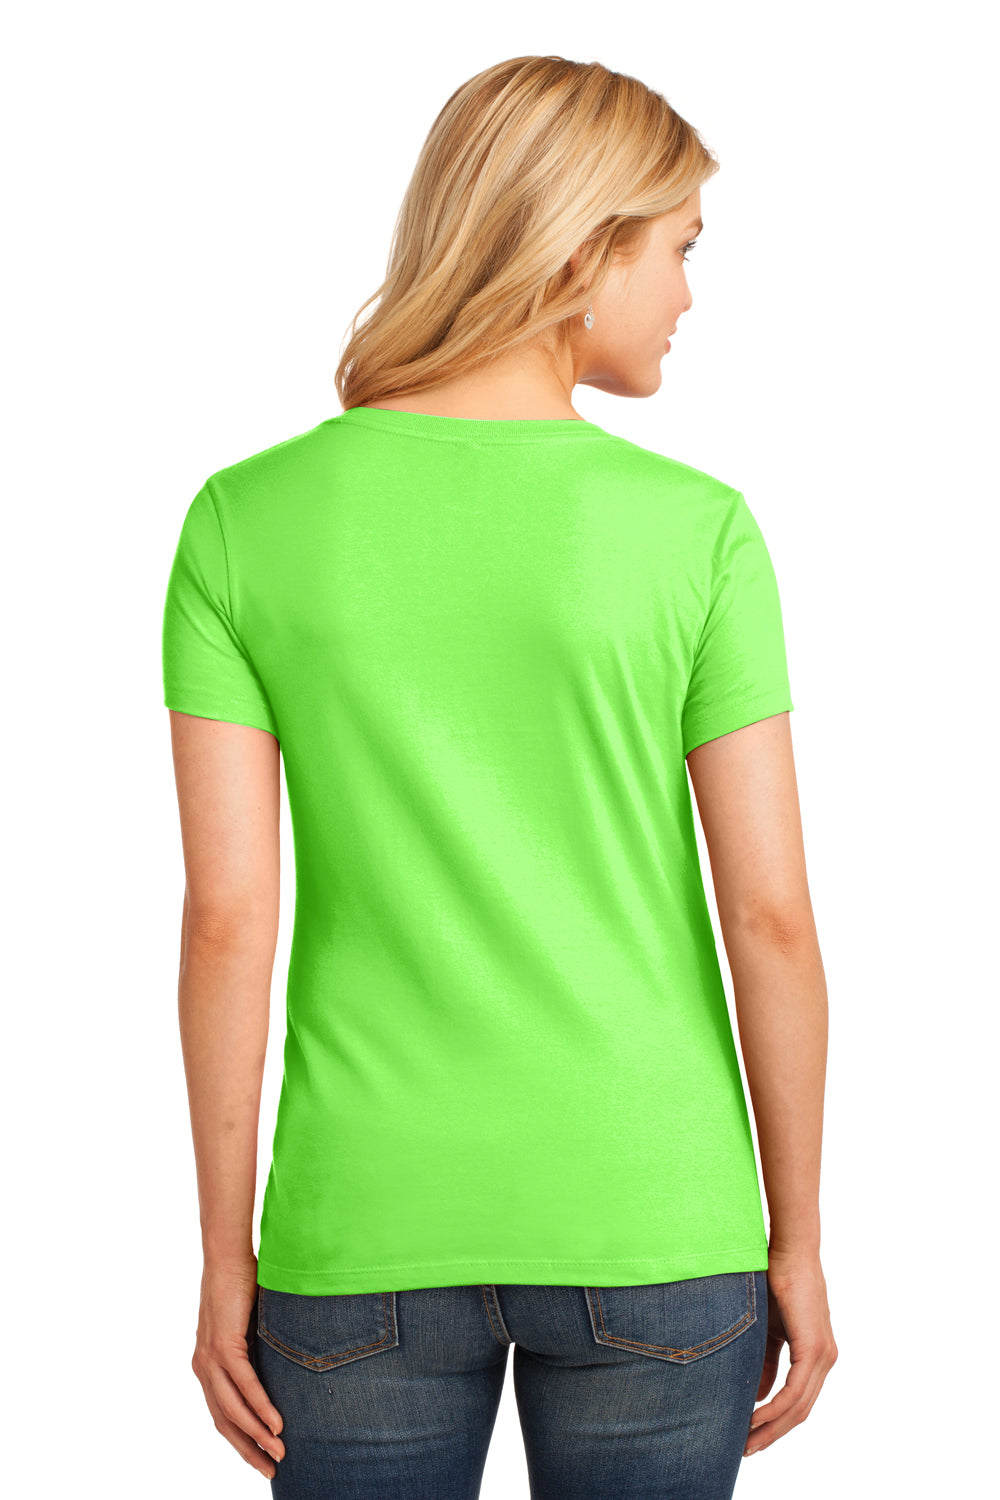 Port & Company LPC54V Womens Core Short Sleeve V-Neck T-Shirt Neon Green Back